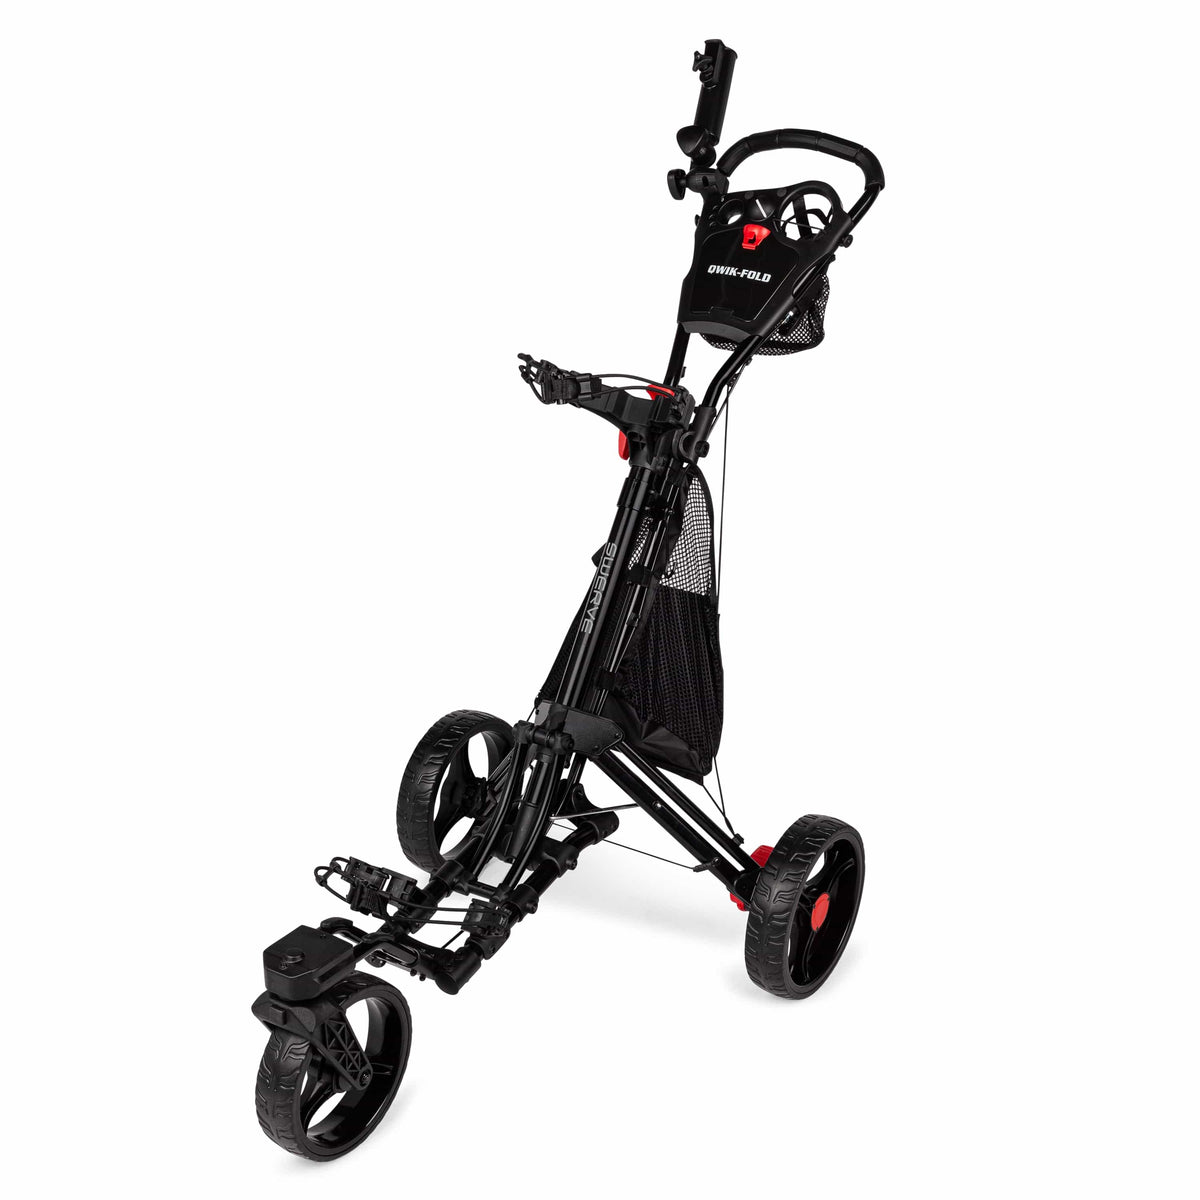 Founders Club Swerve 3 Wheel Golf Cart- Black/Black